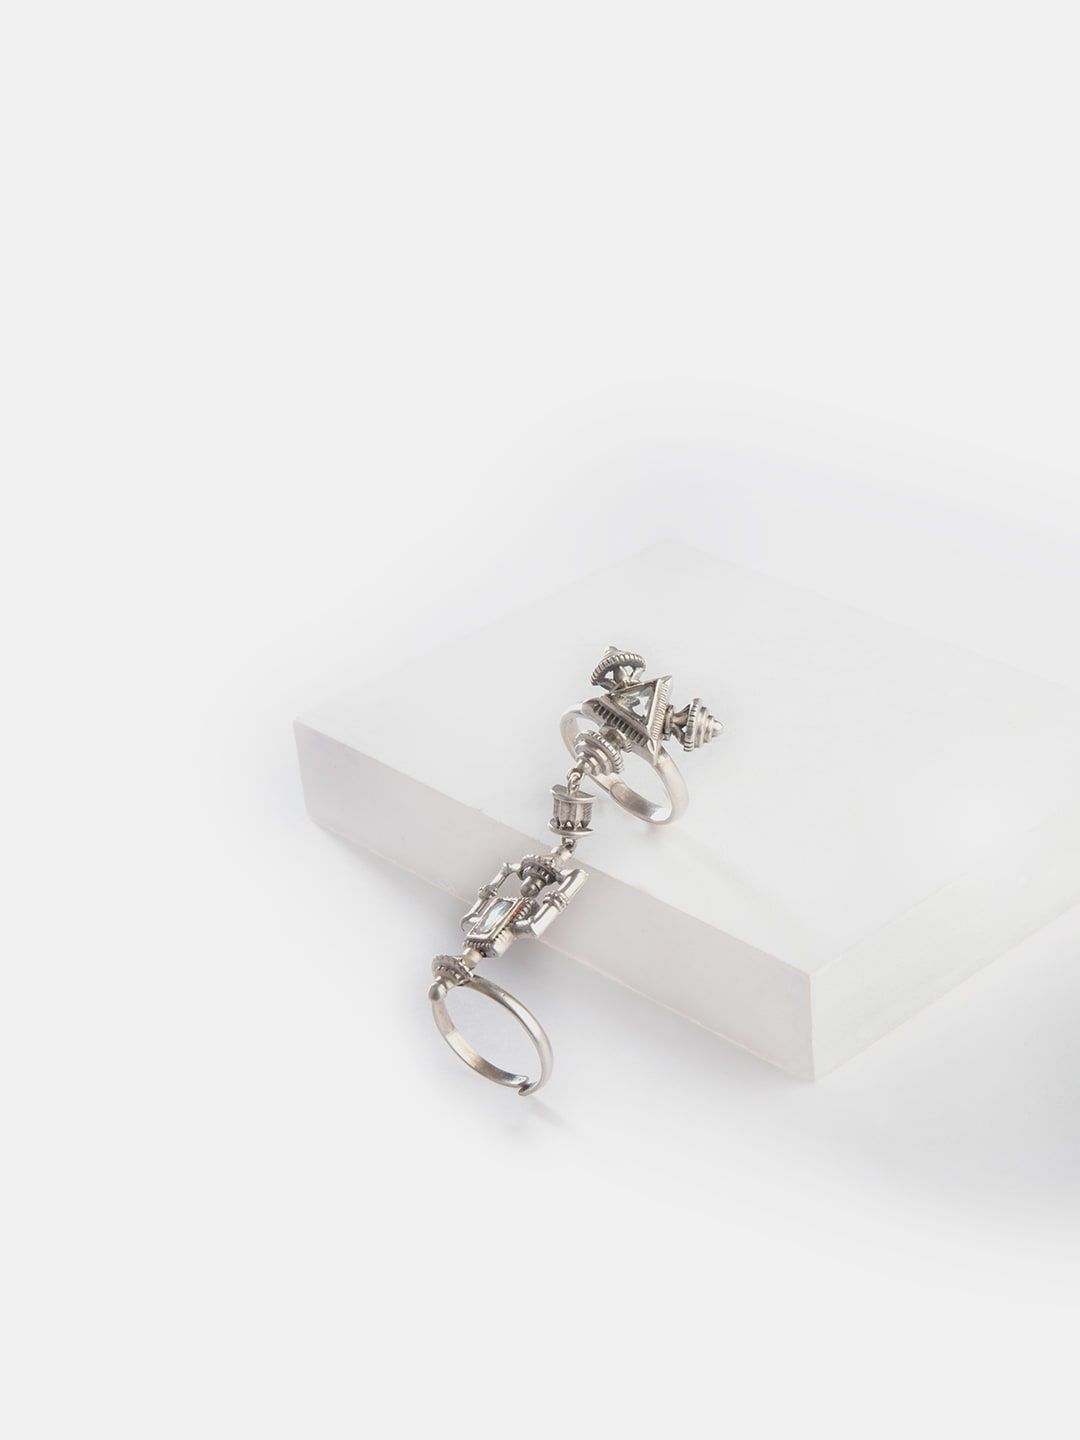 SHAYA Oxidised Silver-Toned Glass Polki-Studded Elizabeth Bennet Adjustable Finger Ring Price in India